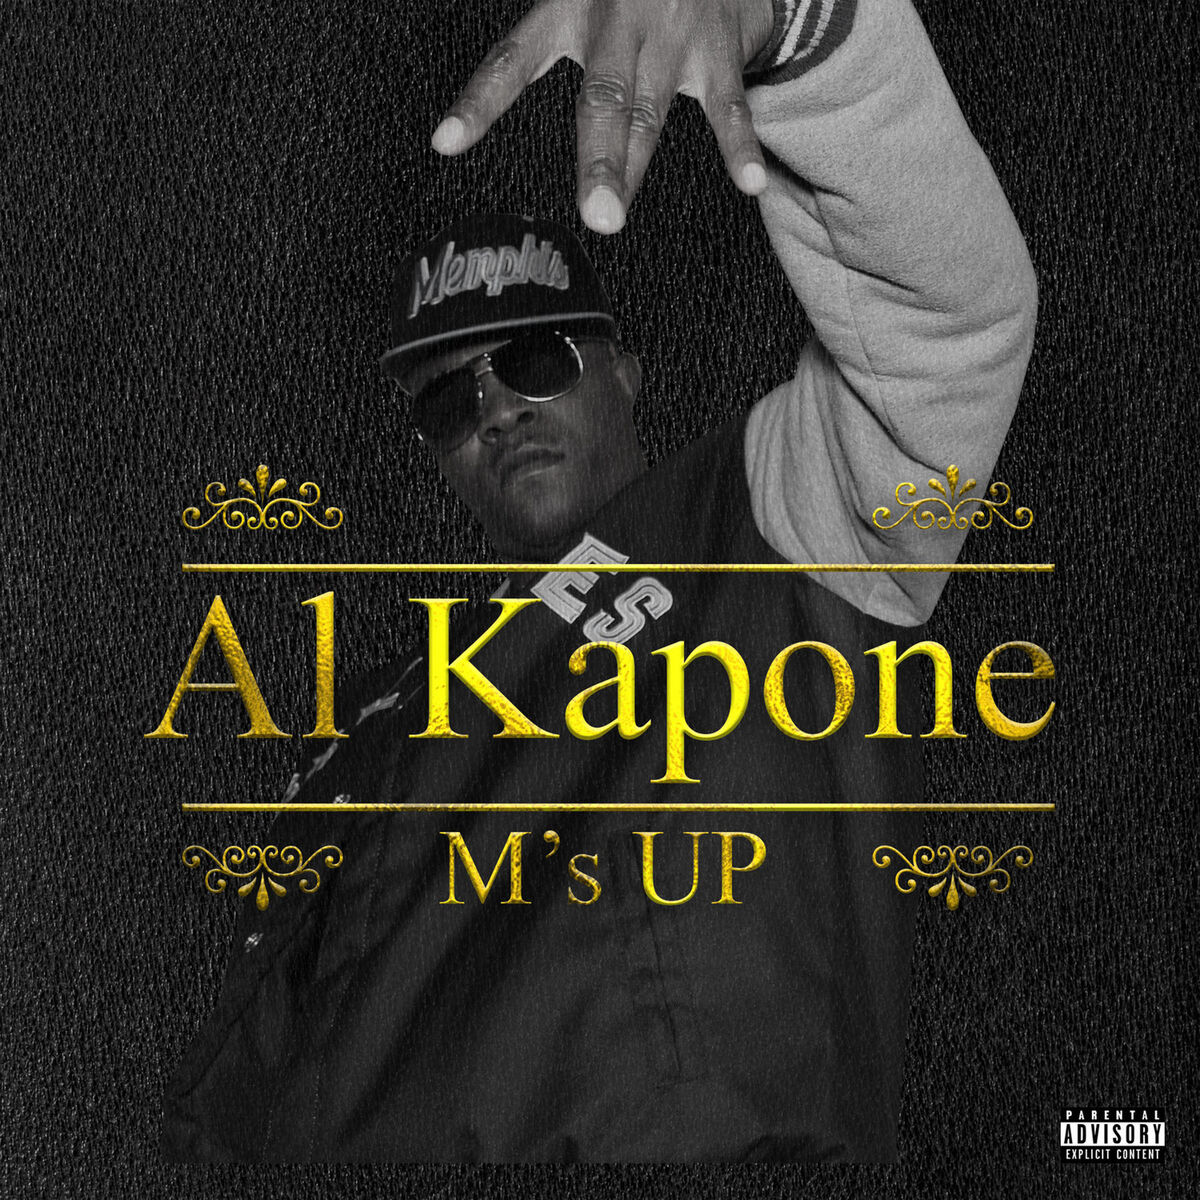 Al Kapone: albums, songs, playlists | Listen on Deezer